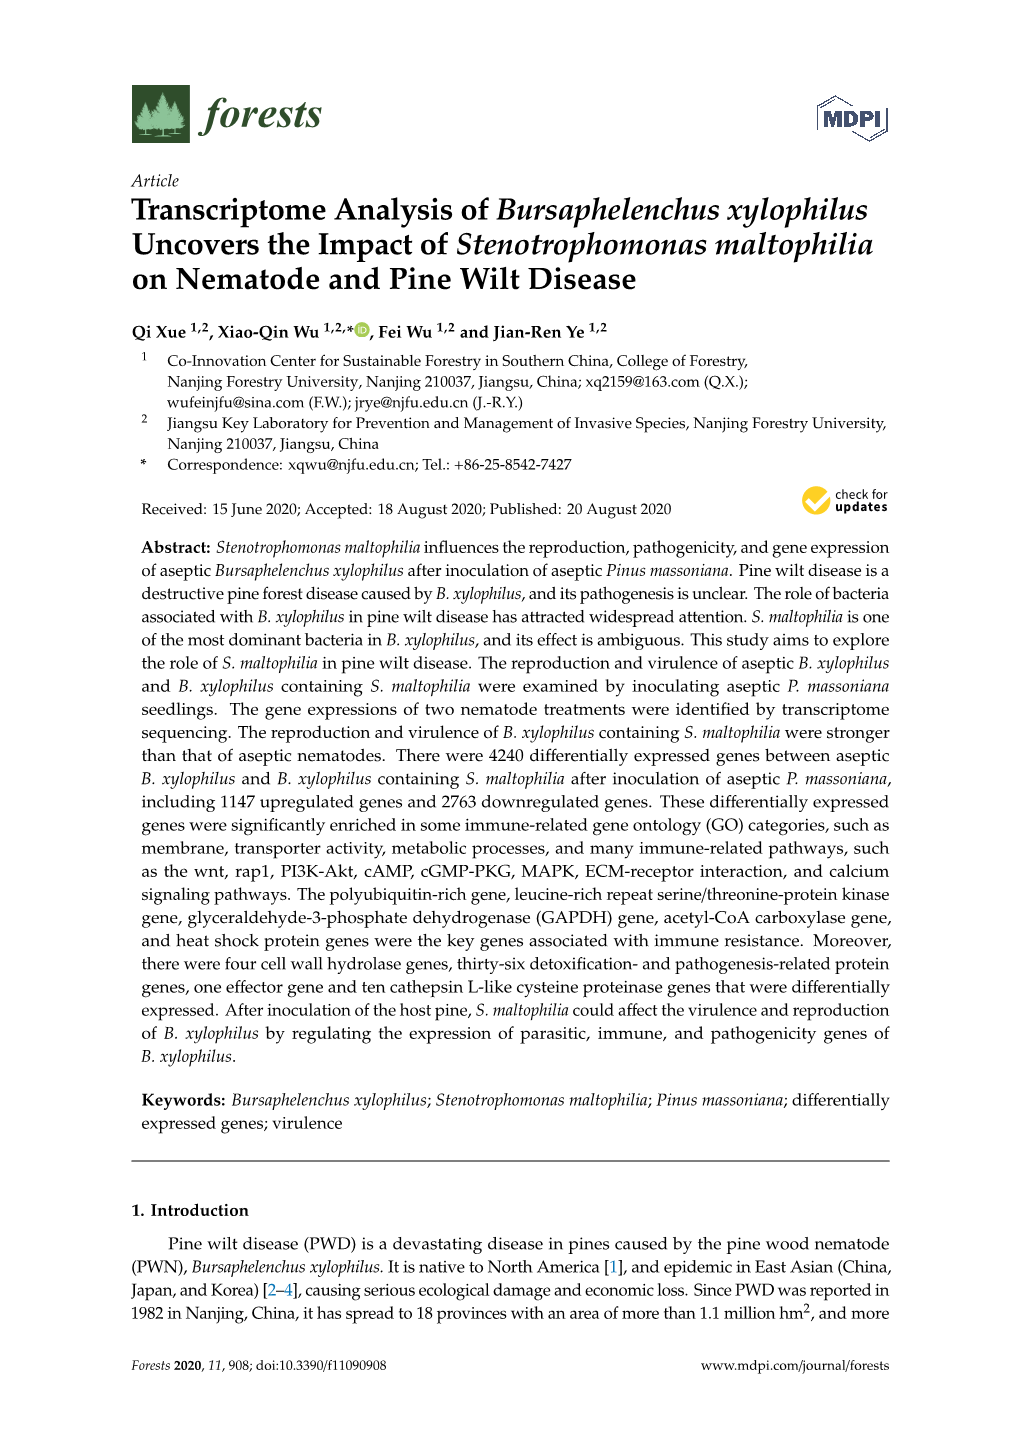 Transcriptome Analysis of Bursaphelenchus Xylophilus Uncovers the Impact of Stenotrophomonas Maltophilia on Nematode and Pine Wilt Disease